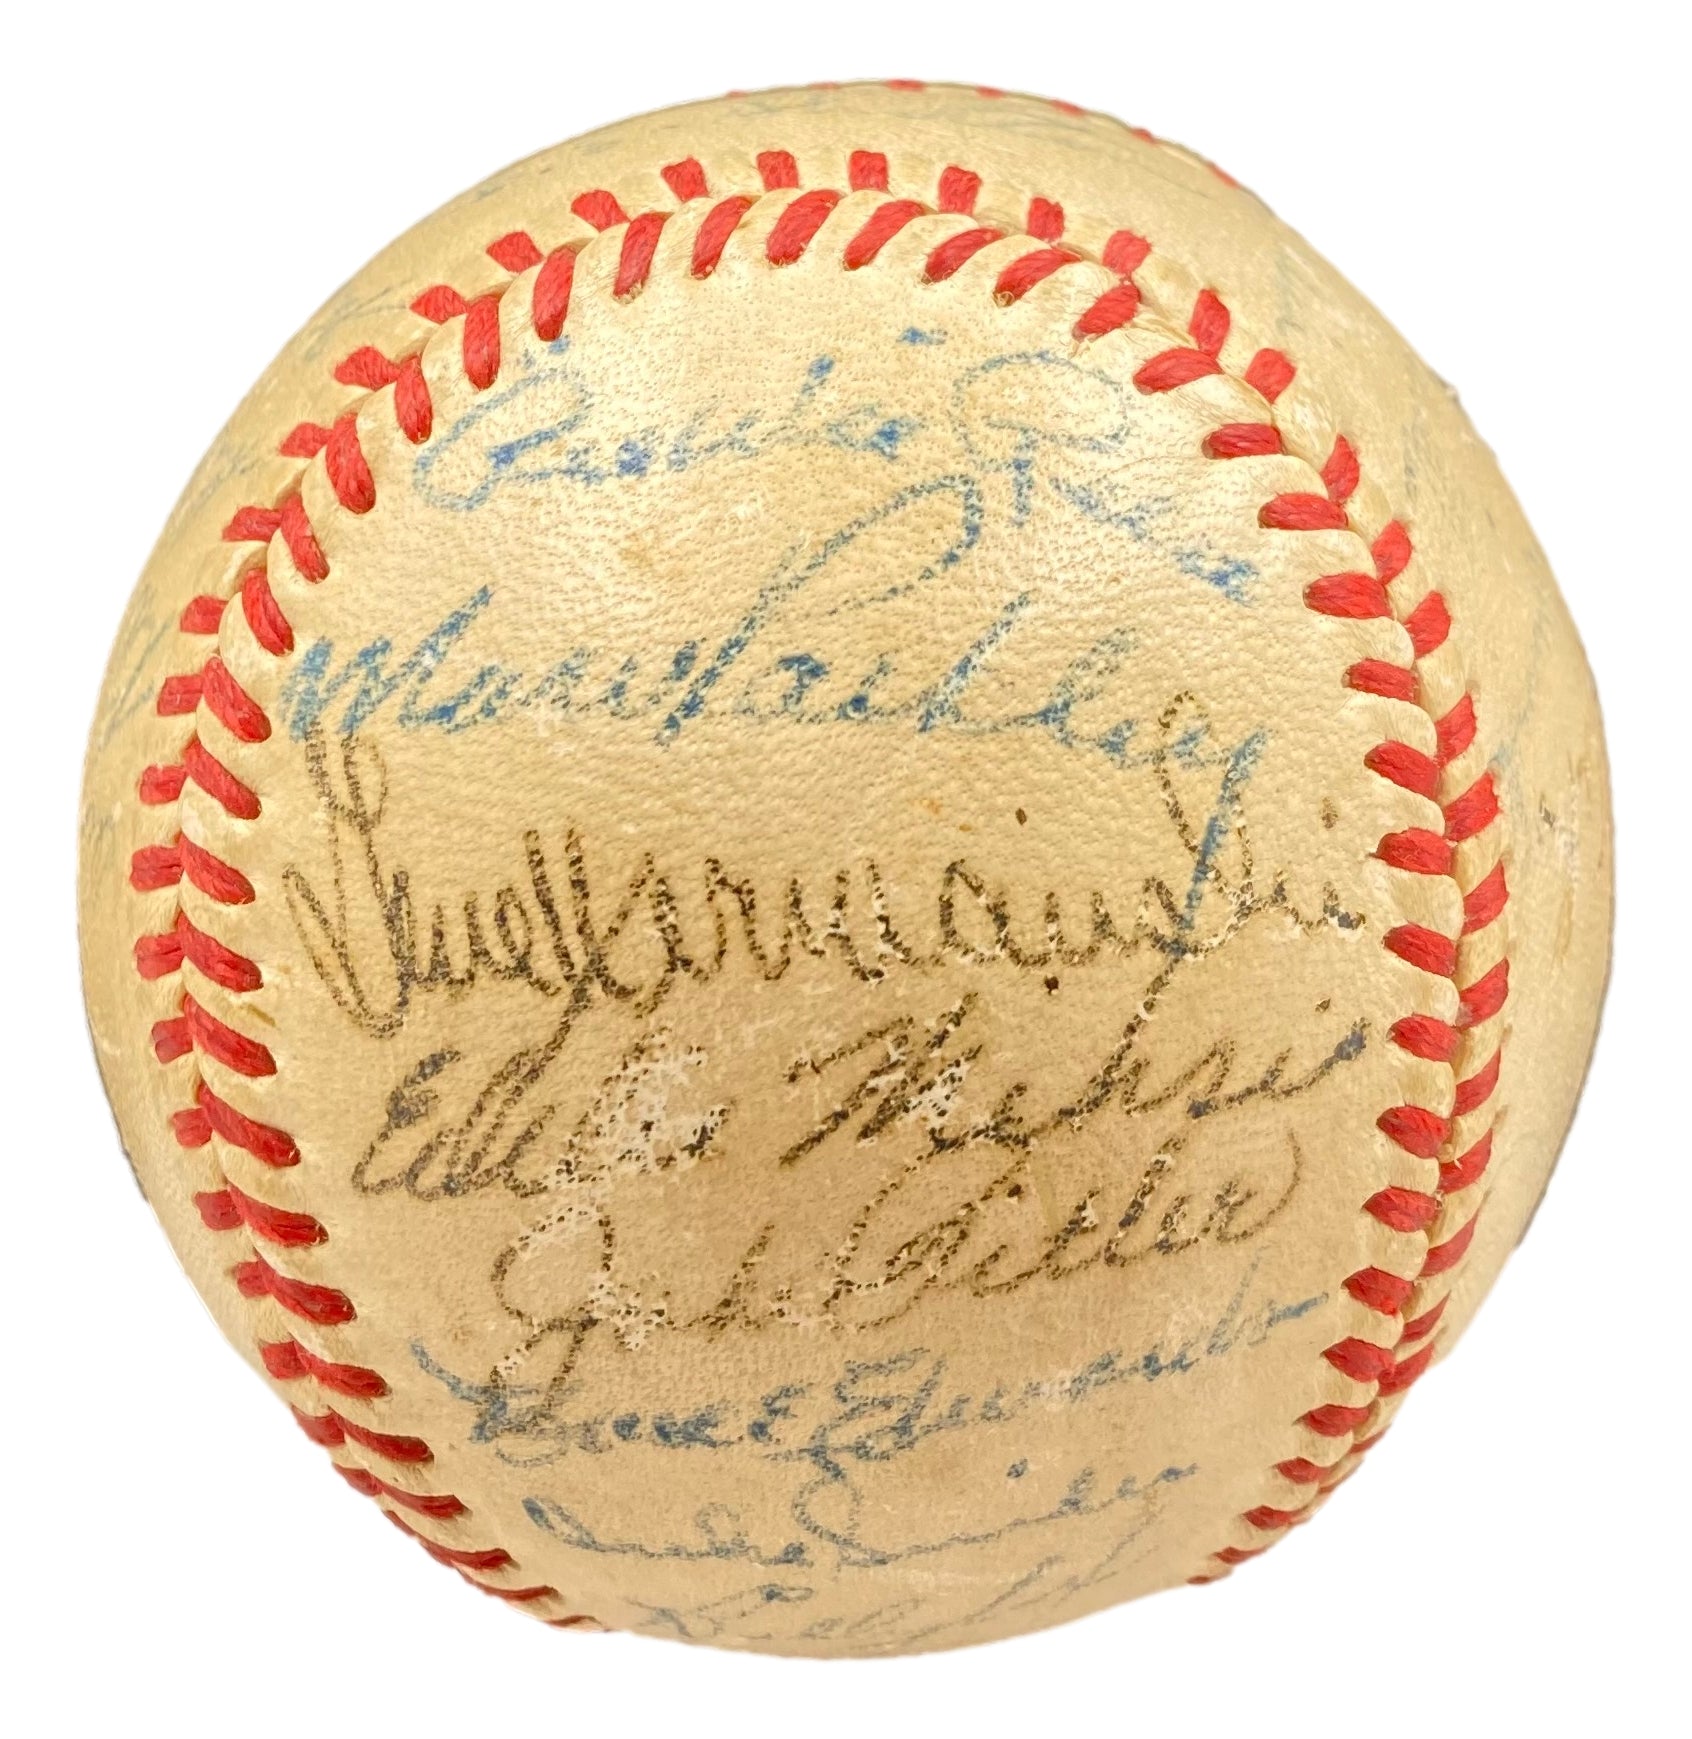 1949 Brooklyn Dodgers Team Autographed Spading Baseball w/ Jackie